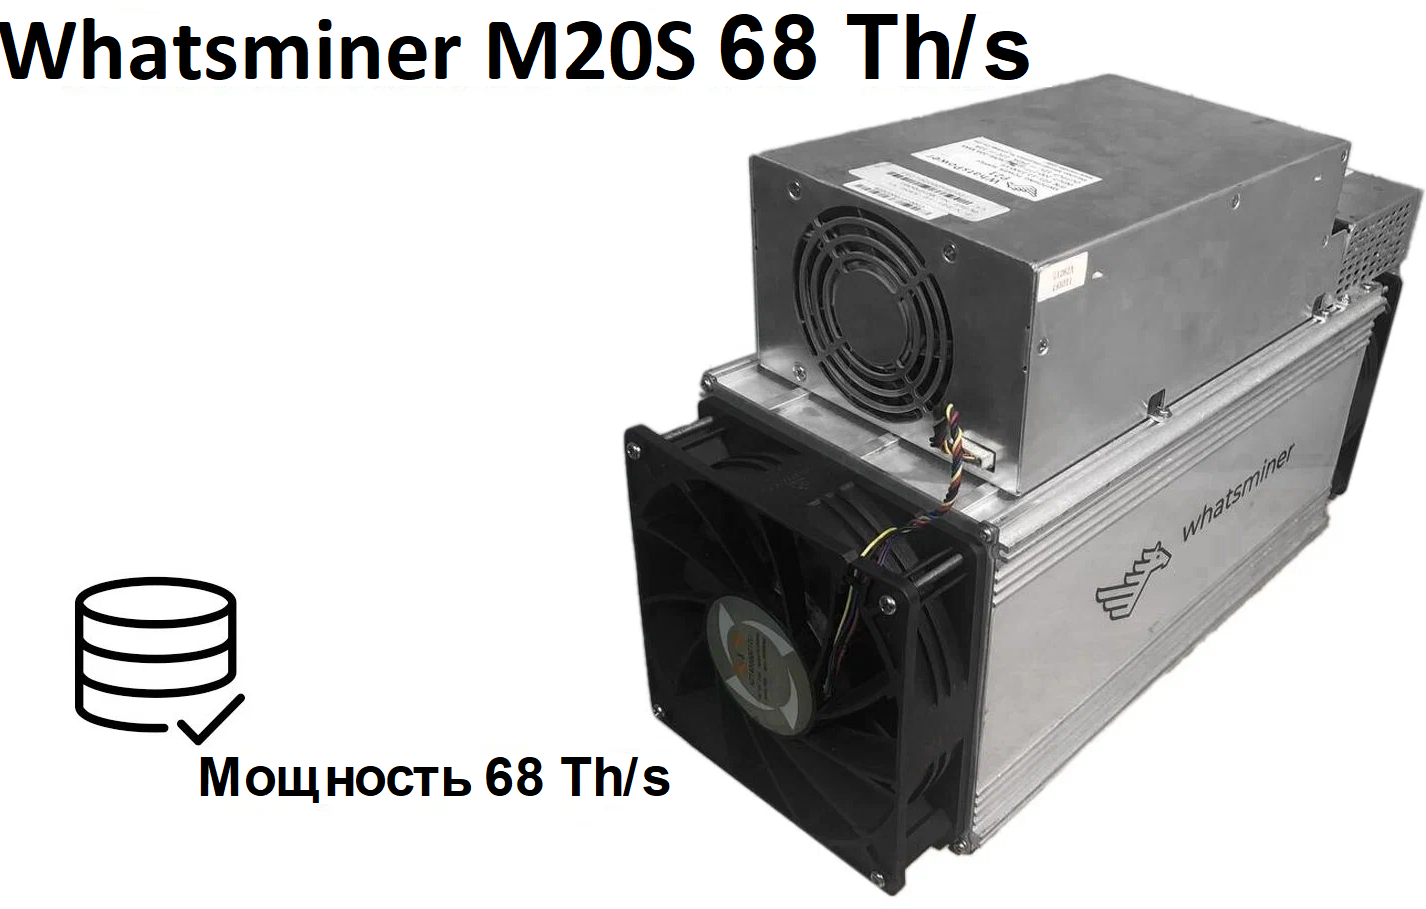 Асик Whatsminer M20S 68 Th/s /2020 года выпуска/s / с блоком питания